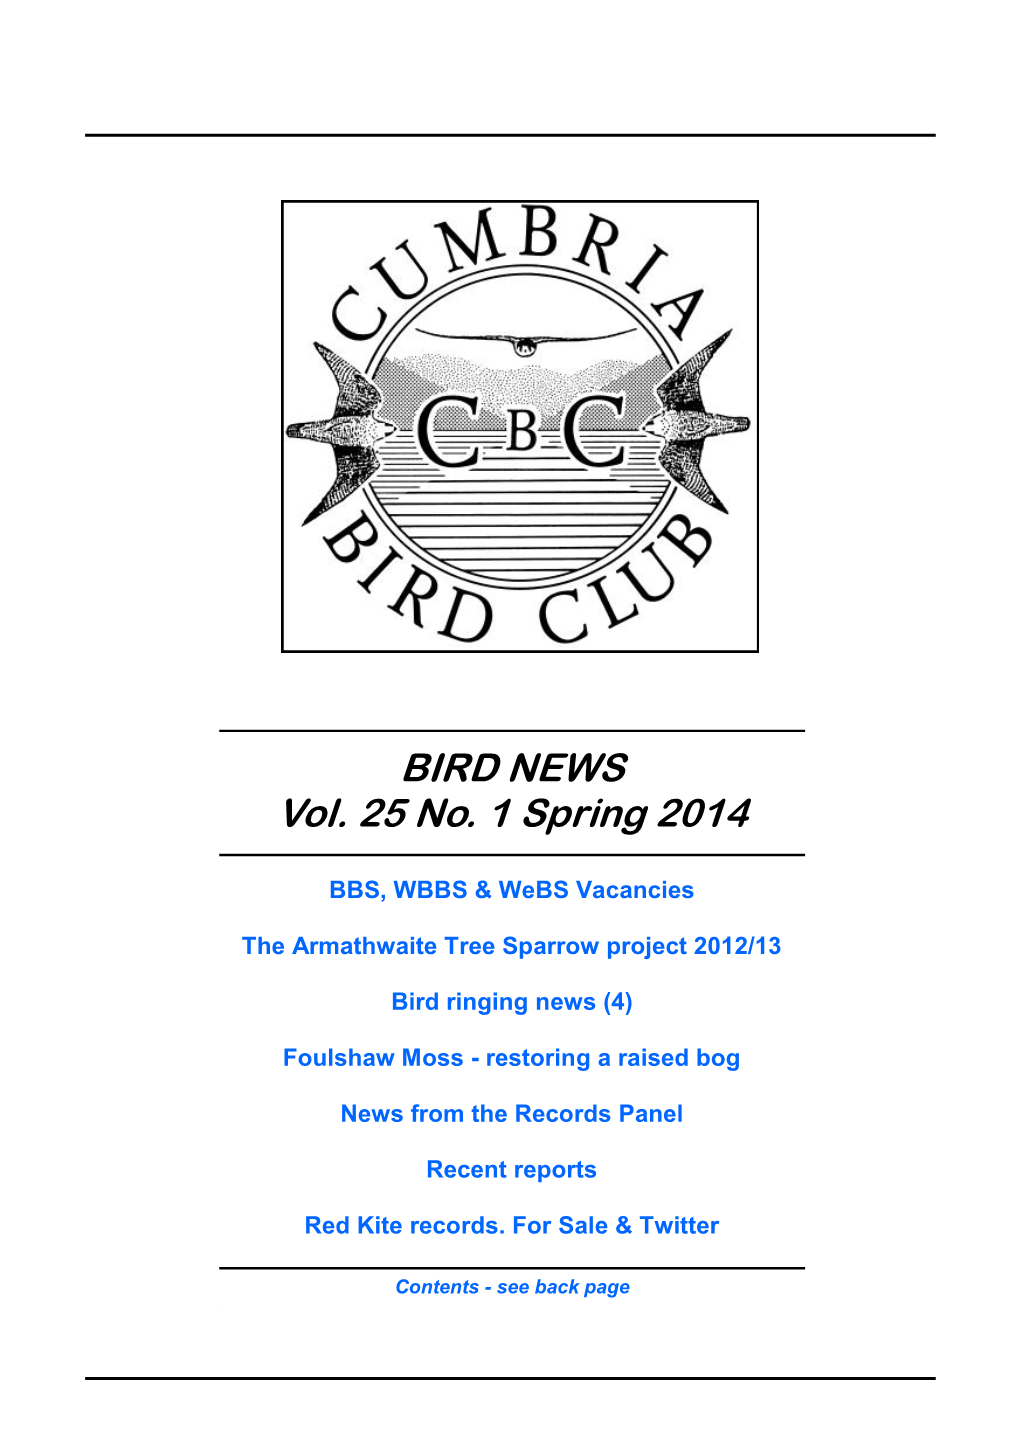 BIRD NEWS Vol. 25 No. 1 Spring 2014